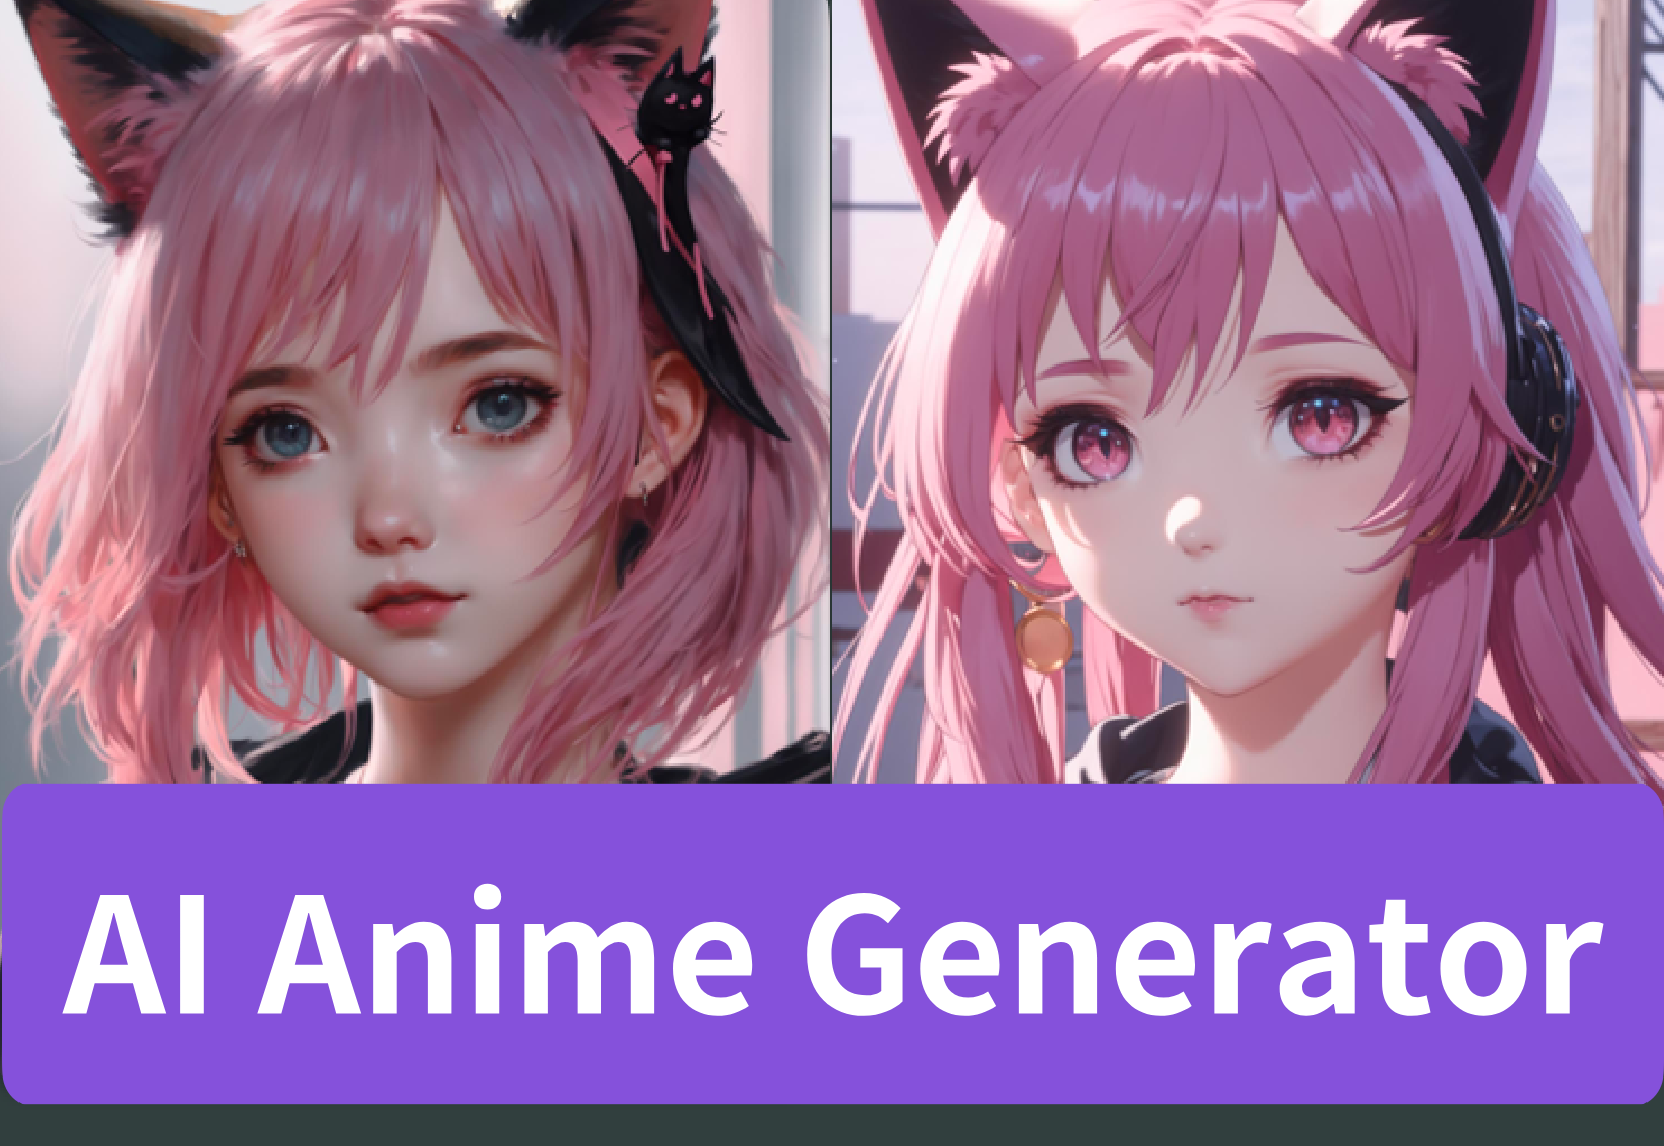 Anime AI Generator: Transform Photos into Anime Art